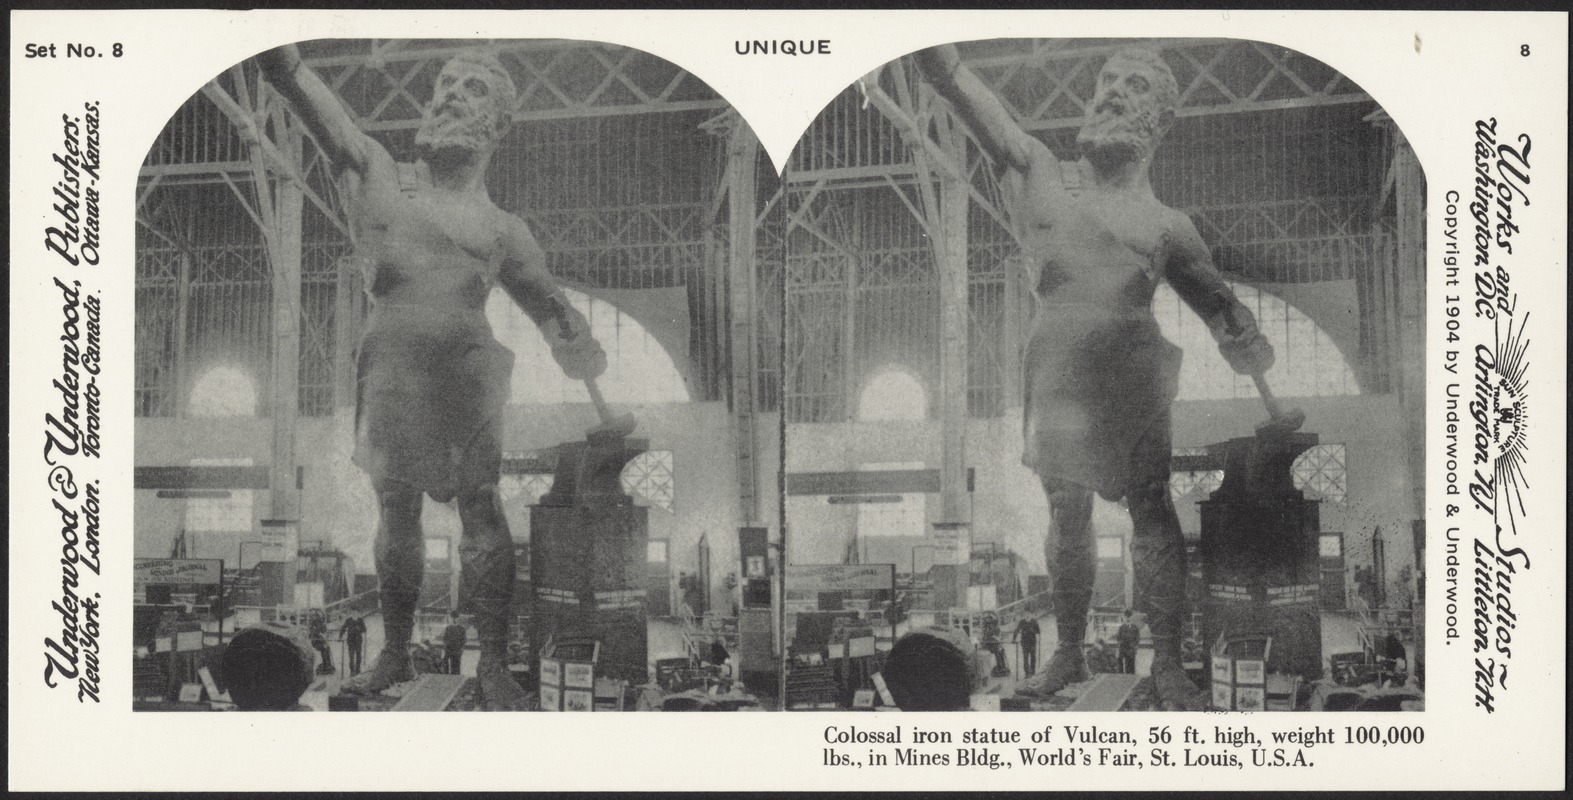 Colossal iron statue of Vulcan, 56 ft. high, weight 100,000 lbs., in Mines Bldg., World's Fair, St. Louis, U.S.A.